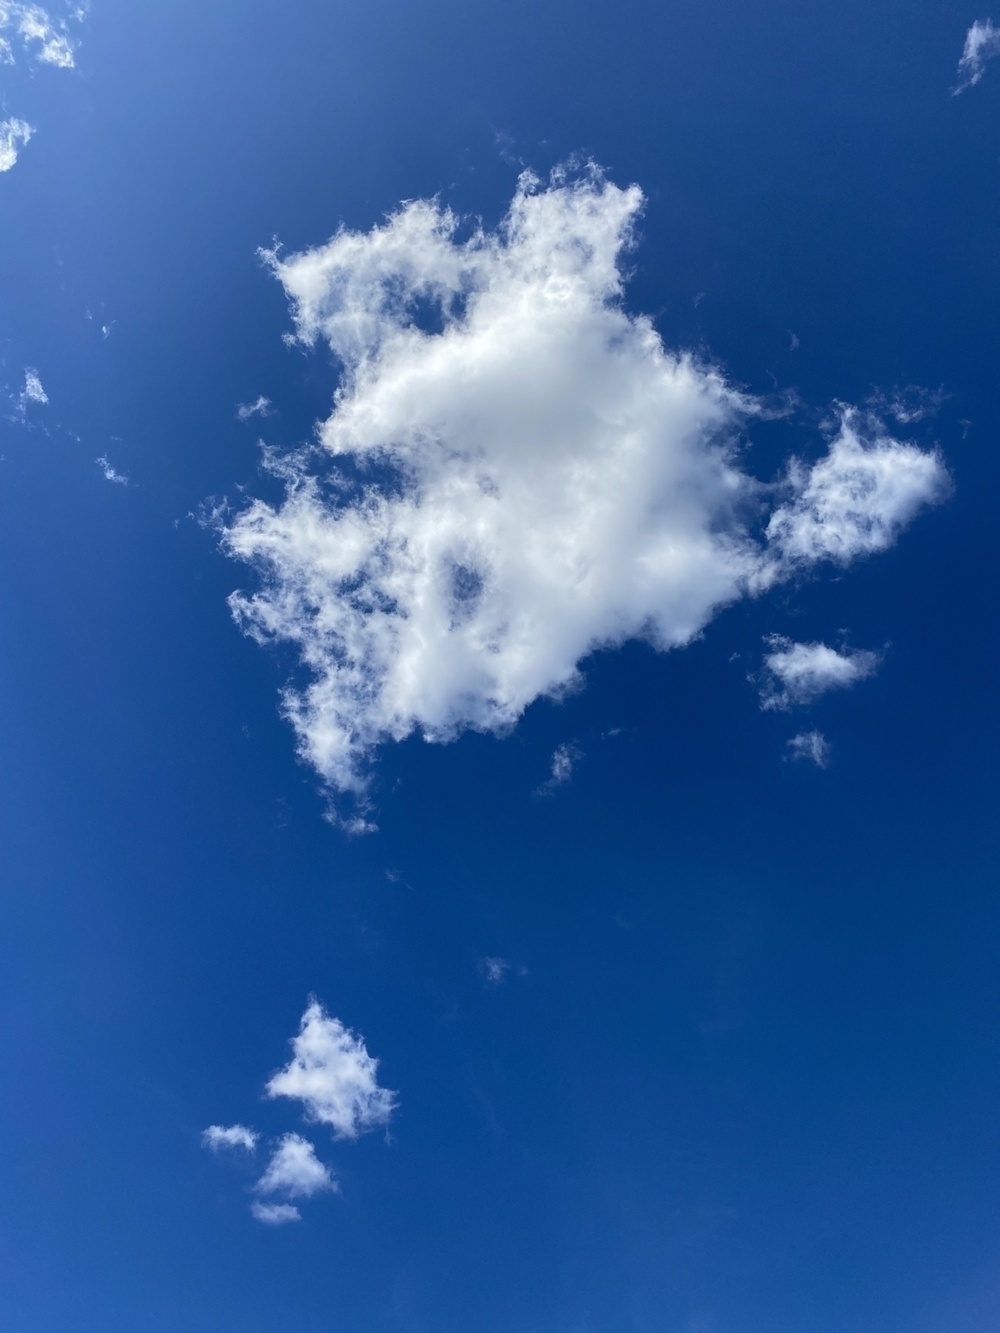 puffy clouds in the blue sky